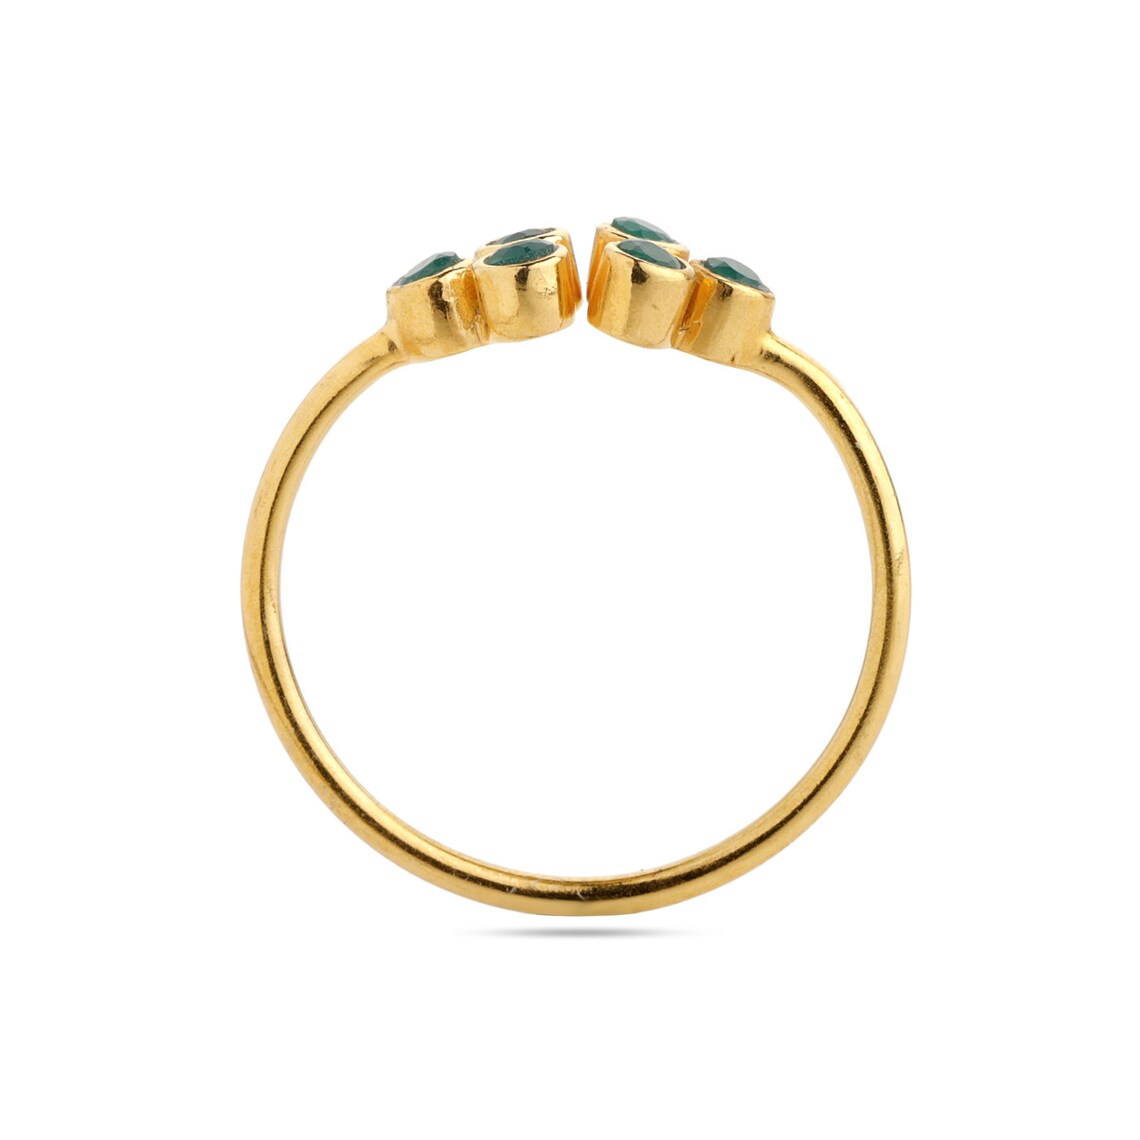 Green Onyx Ring, Open Ring, Minimalist Ring, Dainty Gold Ring, Round Onyx Ring, Gold Ring, Silver Ring, Stacking Ring, adjustable ring